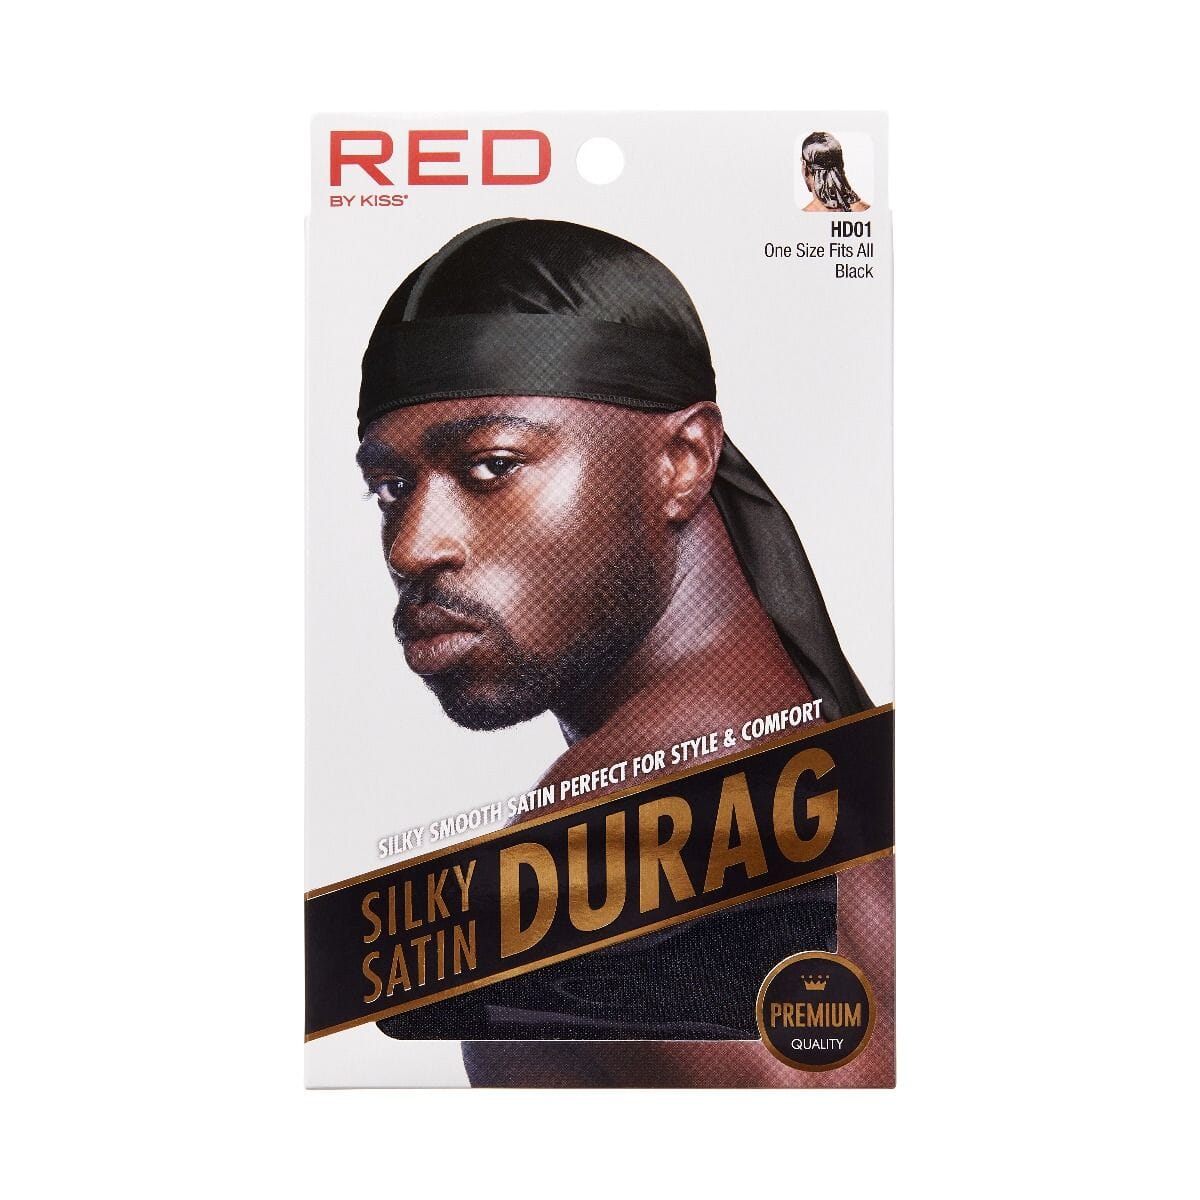 #5224 HD Ultra Sheer Stocking Wig Cap / Black Nude (12PC)